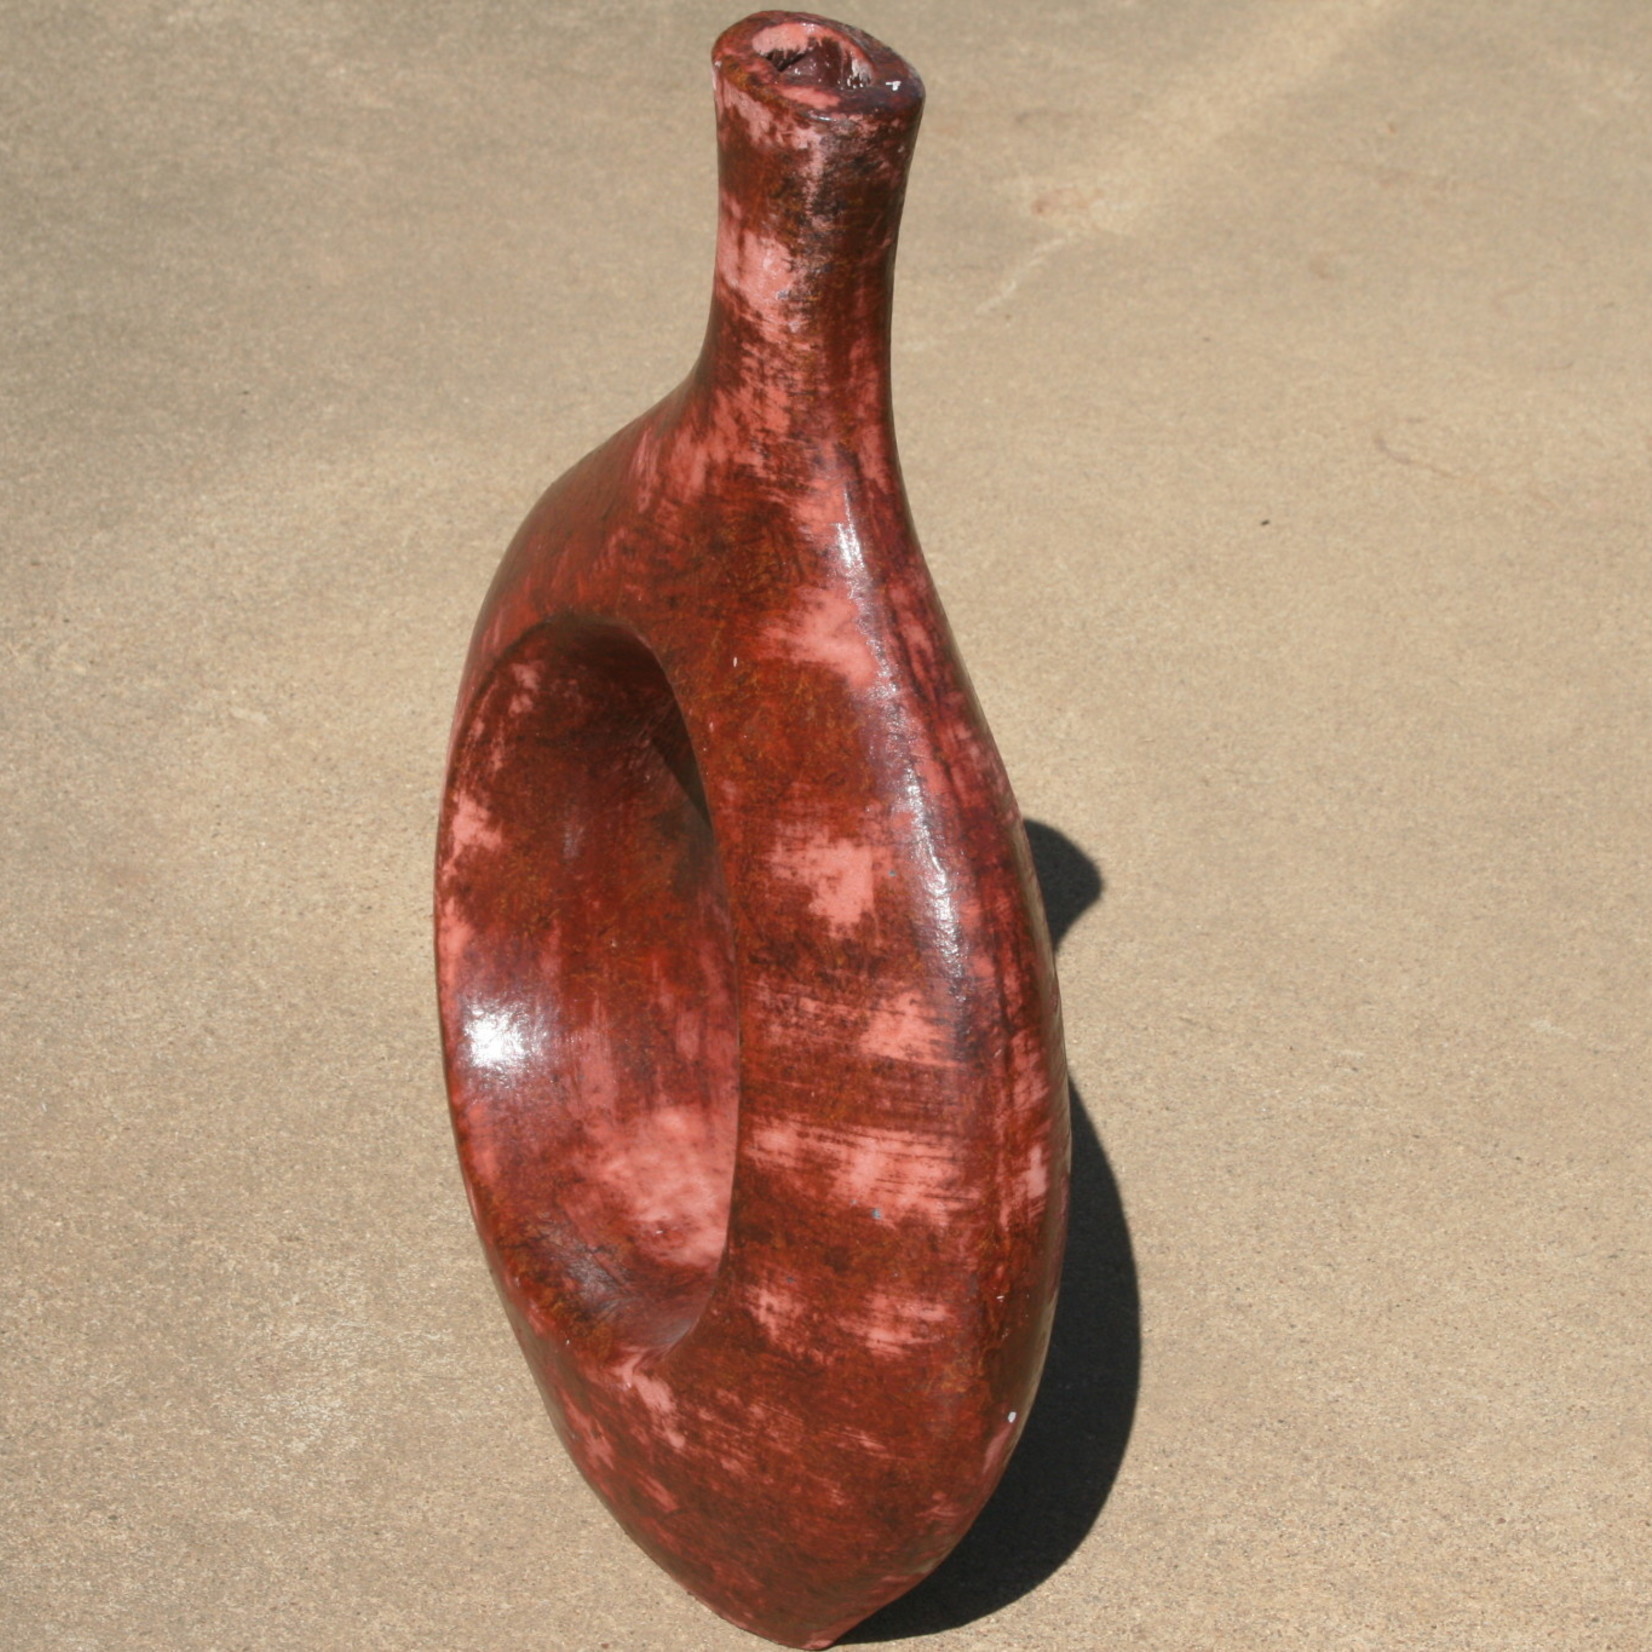 Red Ceramic Circle Vase - Small